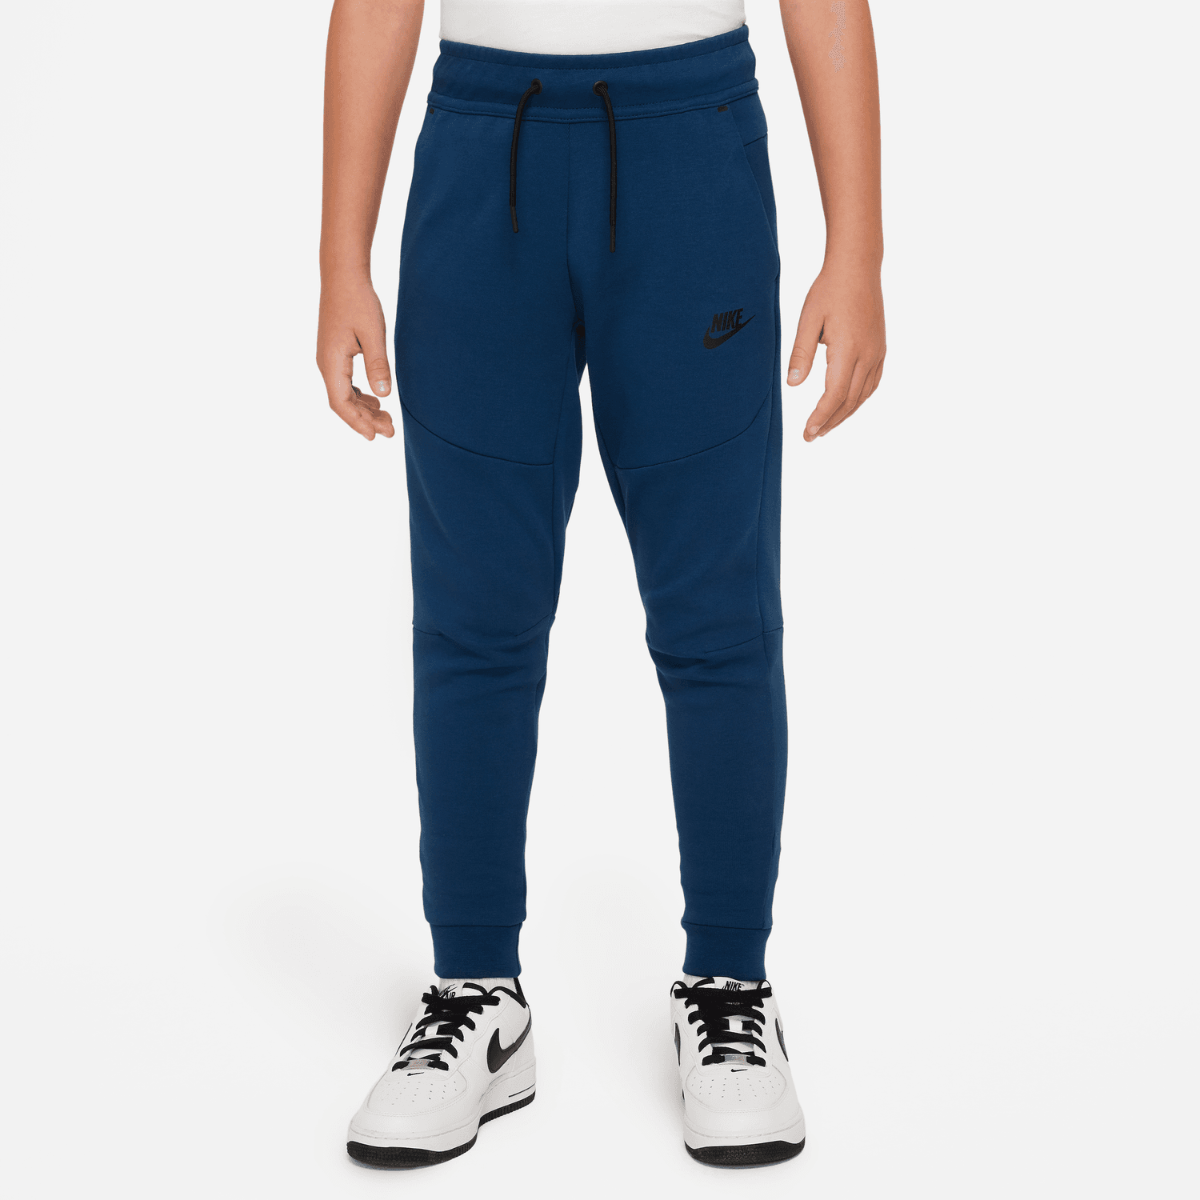 Joggers Nike Tech Fleece Junior - Azul marino/Negro